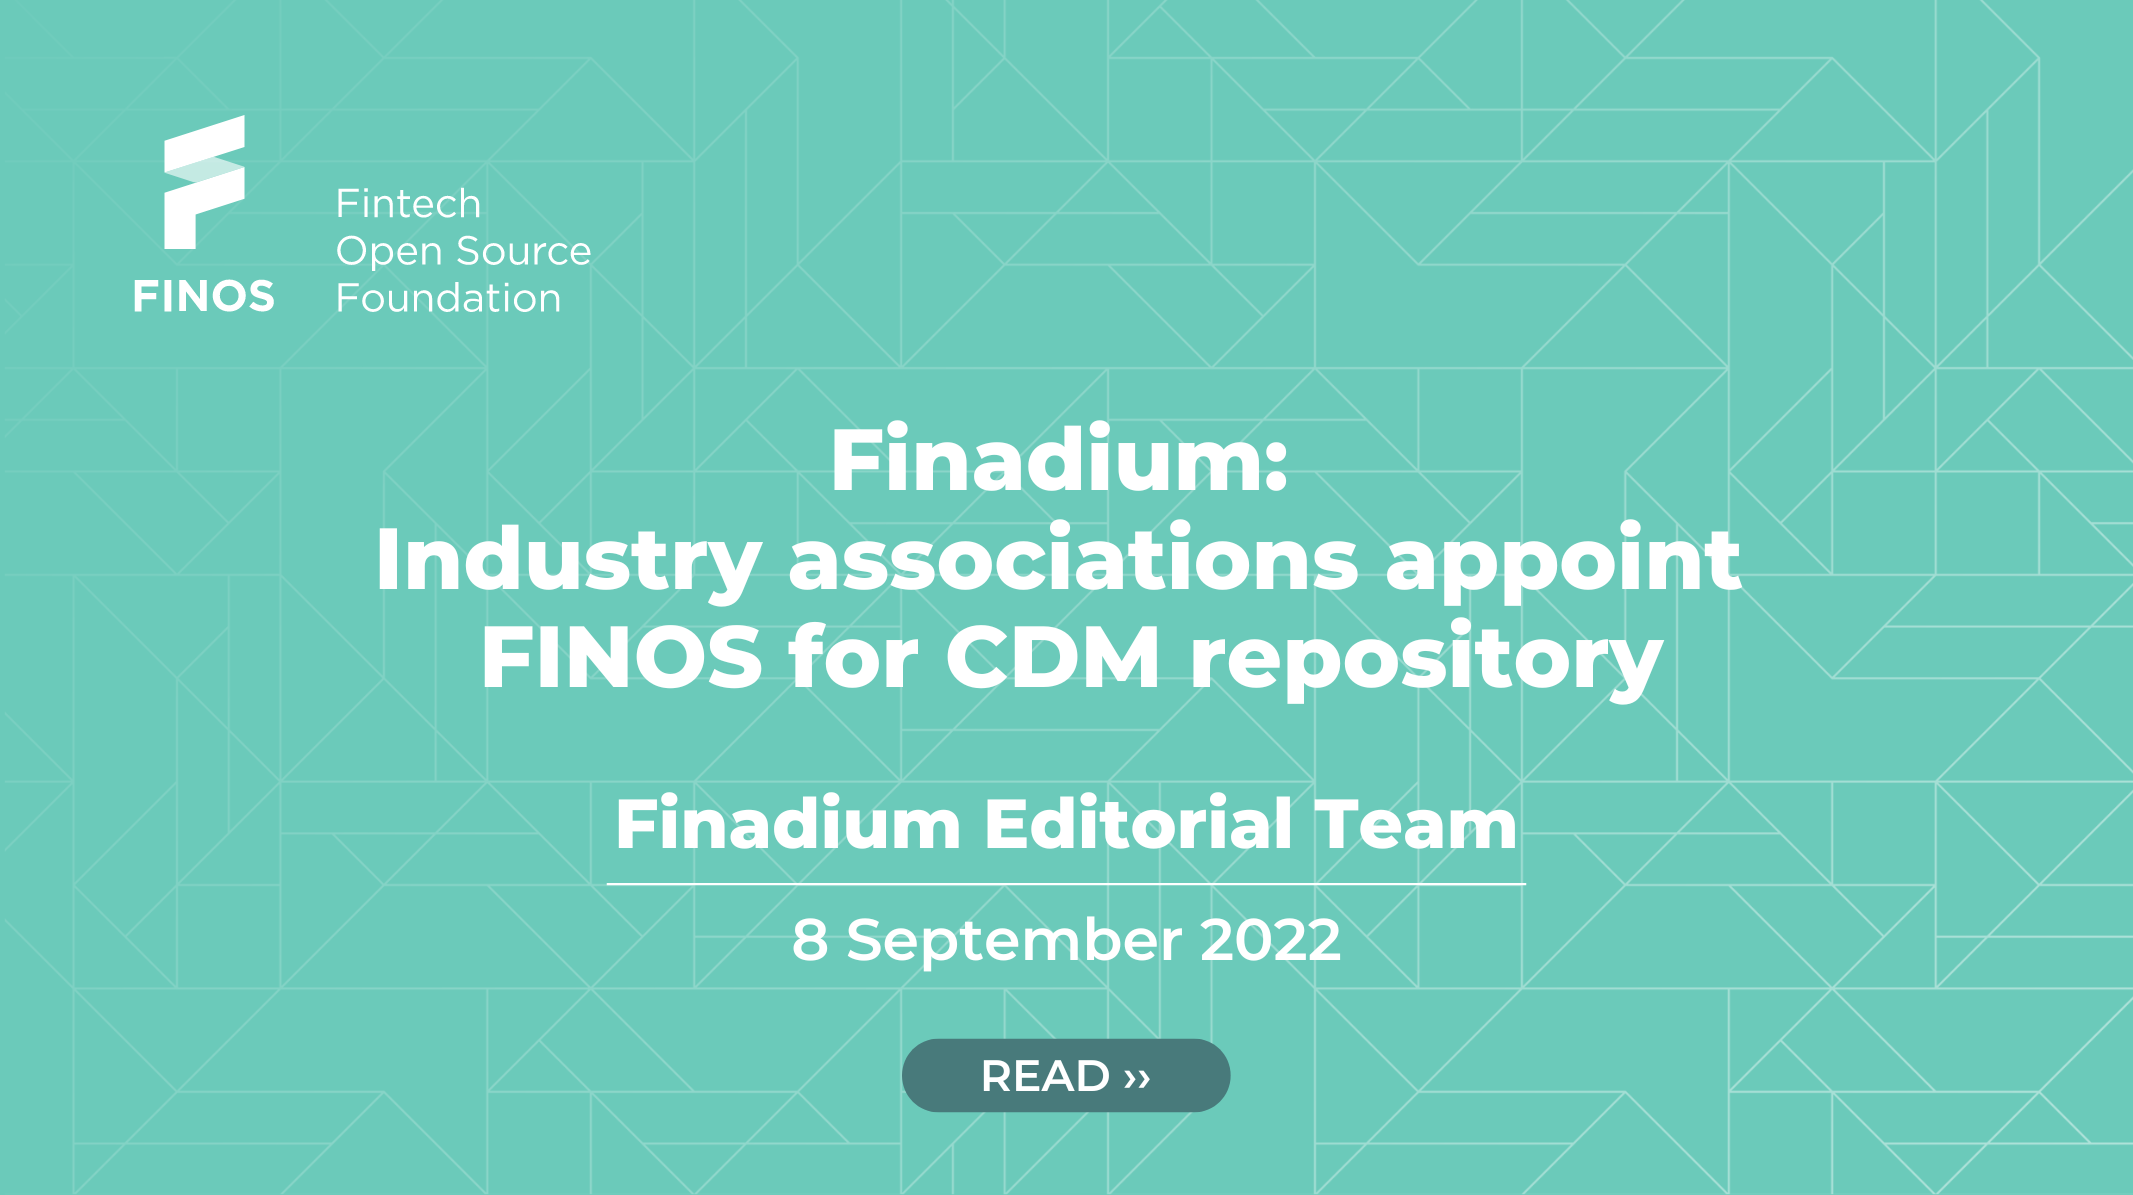 Finadium: Industry associations appoint FINOS for CDM repository